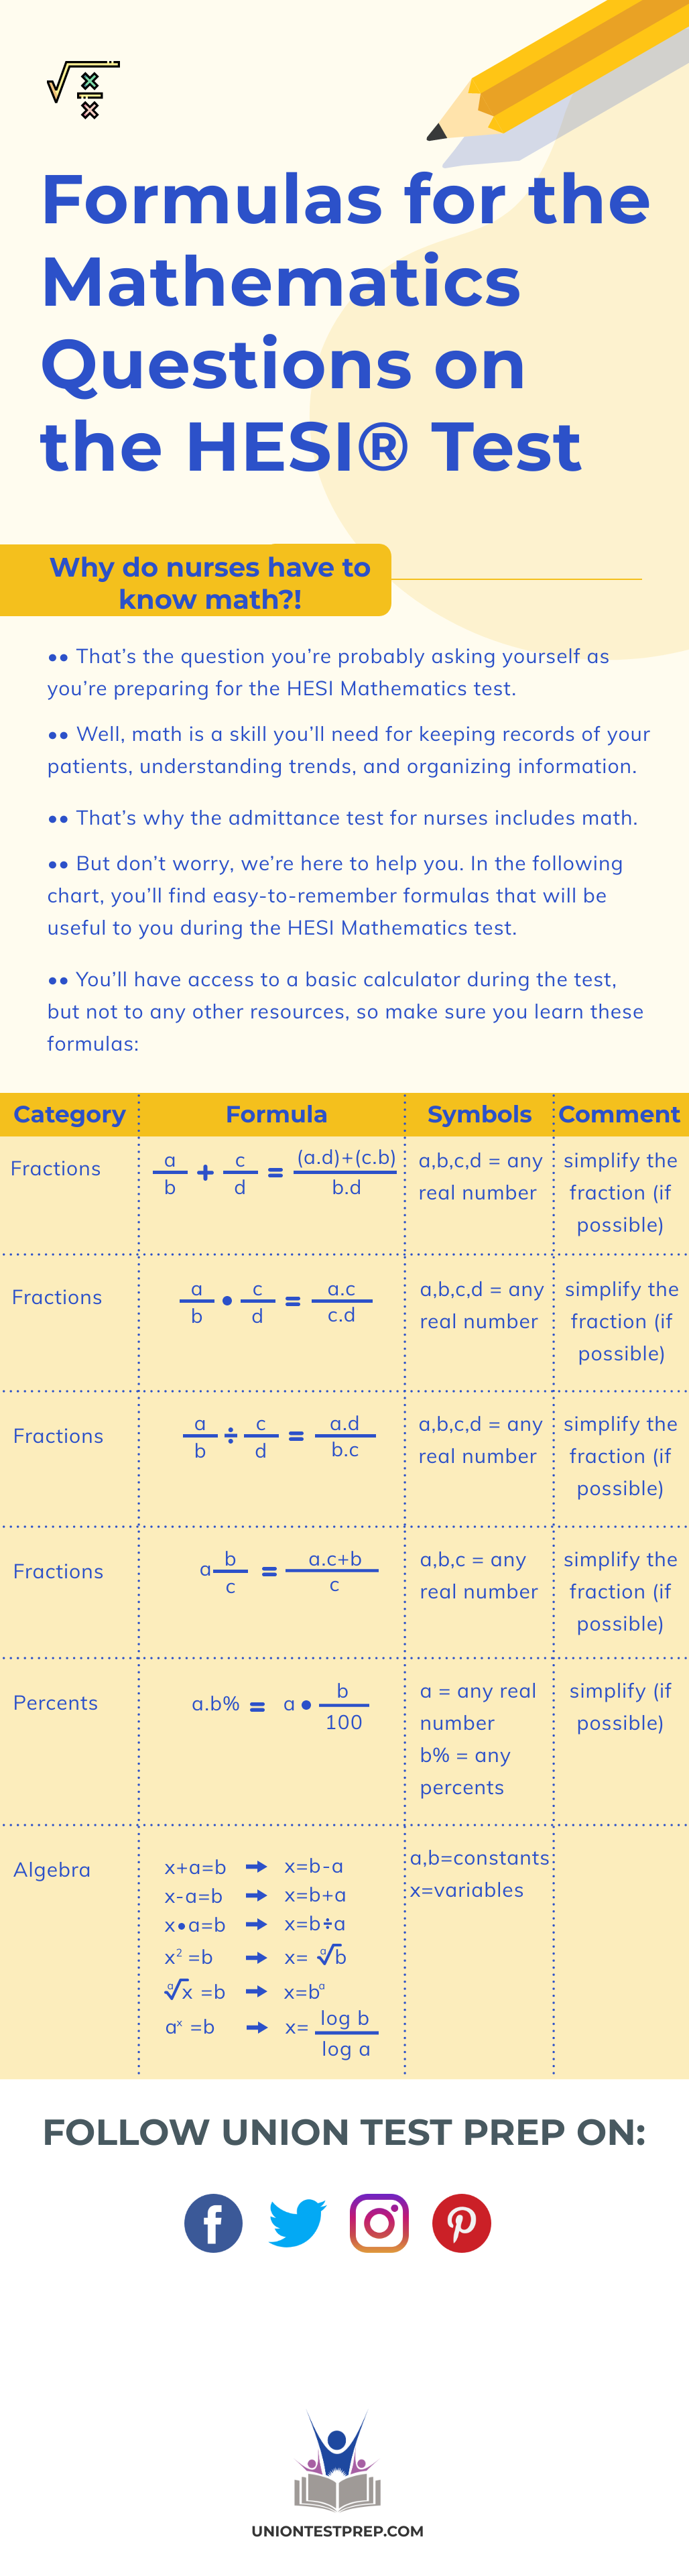 Formulas for the HESI Math Test